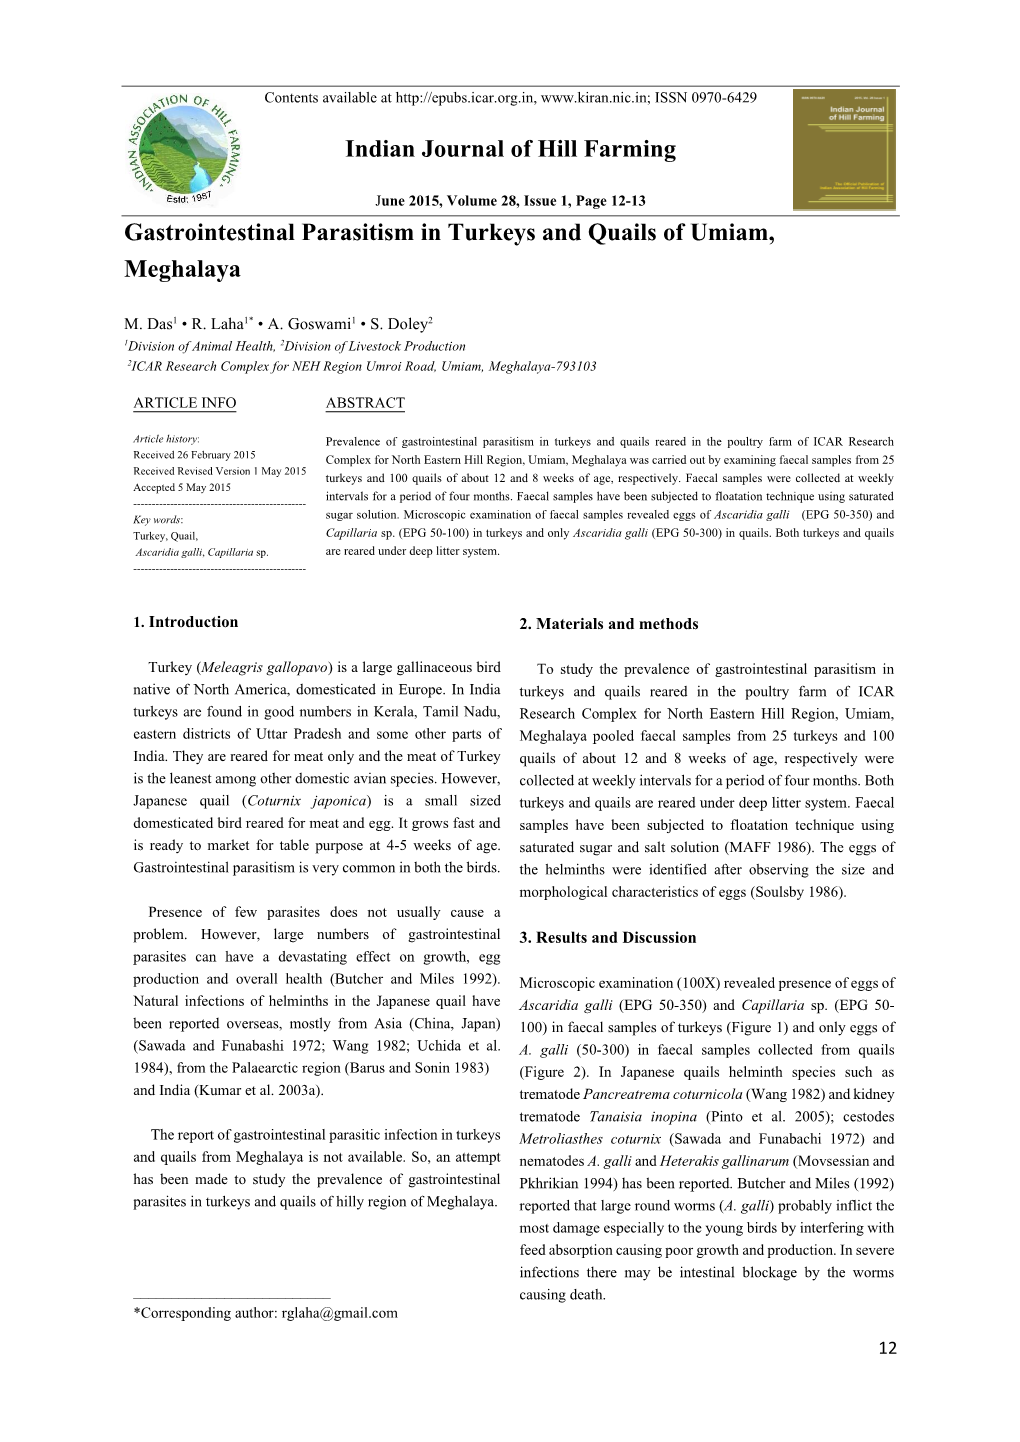 Gastrointestinal Parasitism in Turkeys and Quails of Umiam, Meghalaya